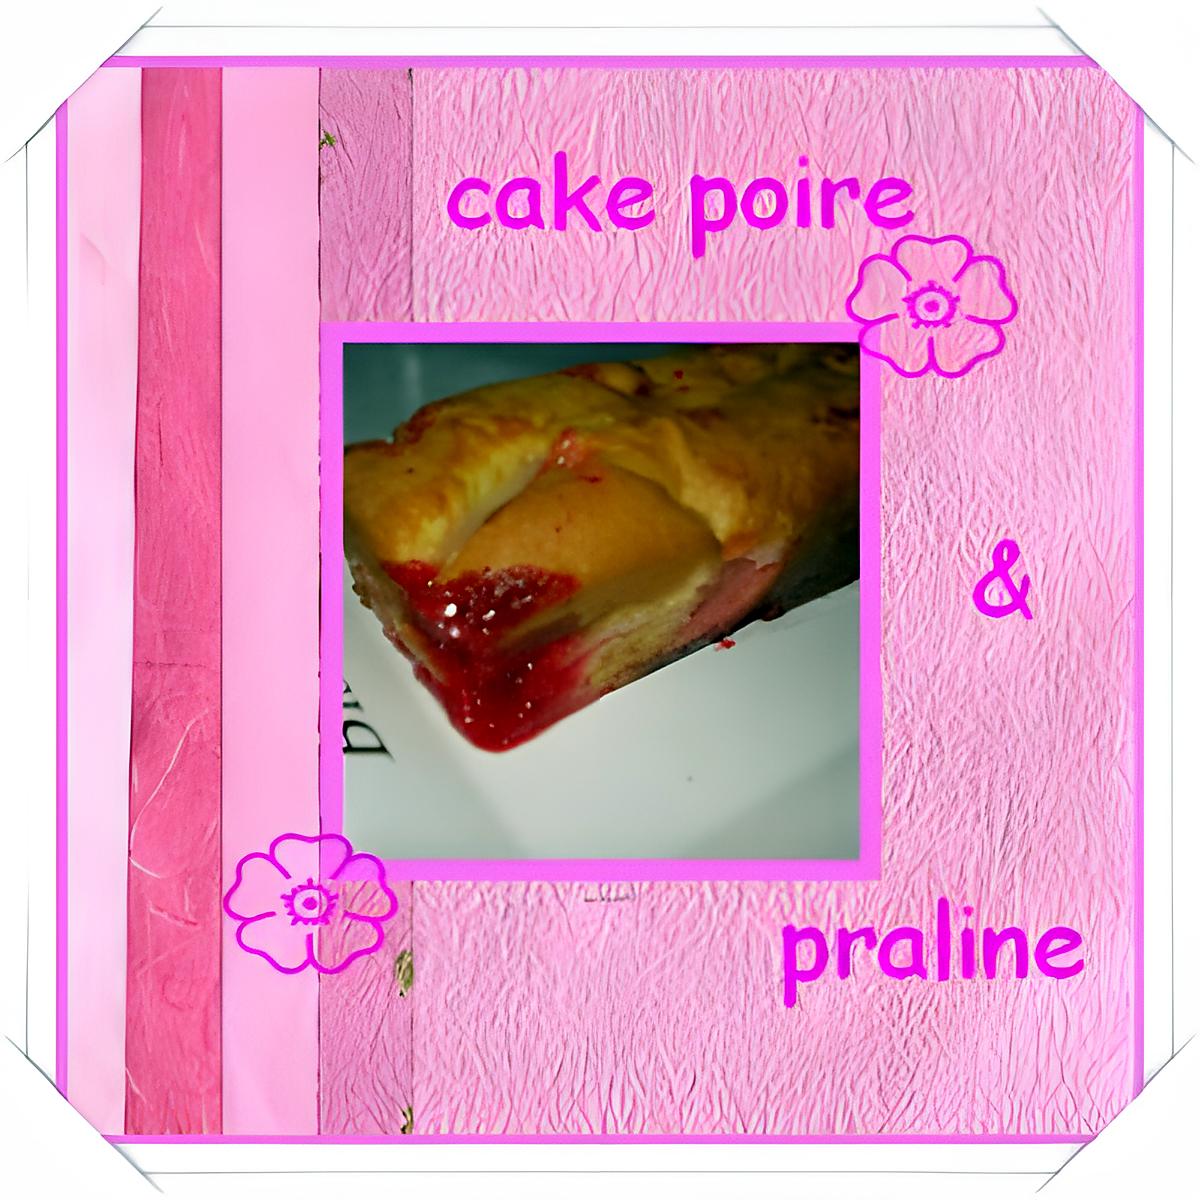 recette cake poire & praline